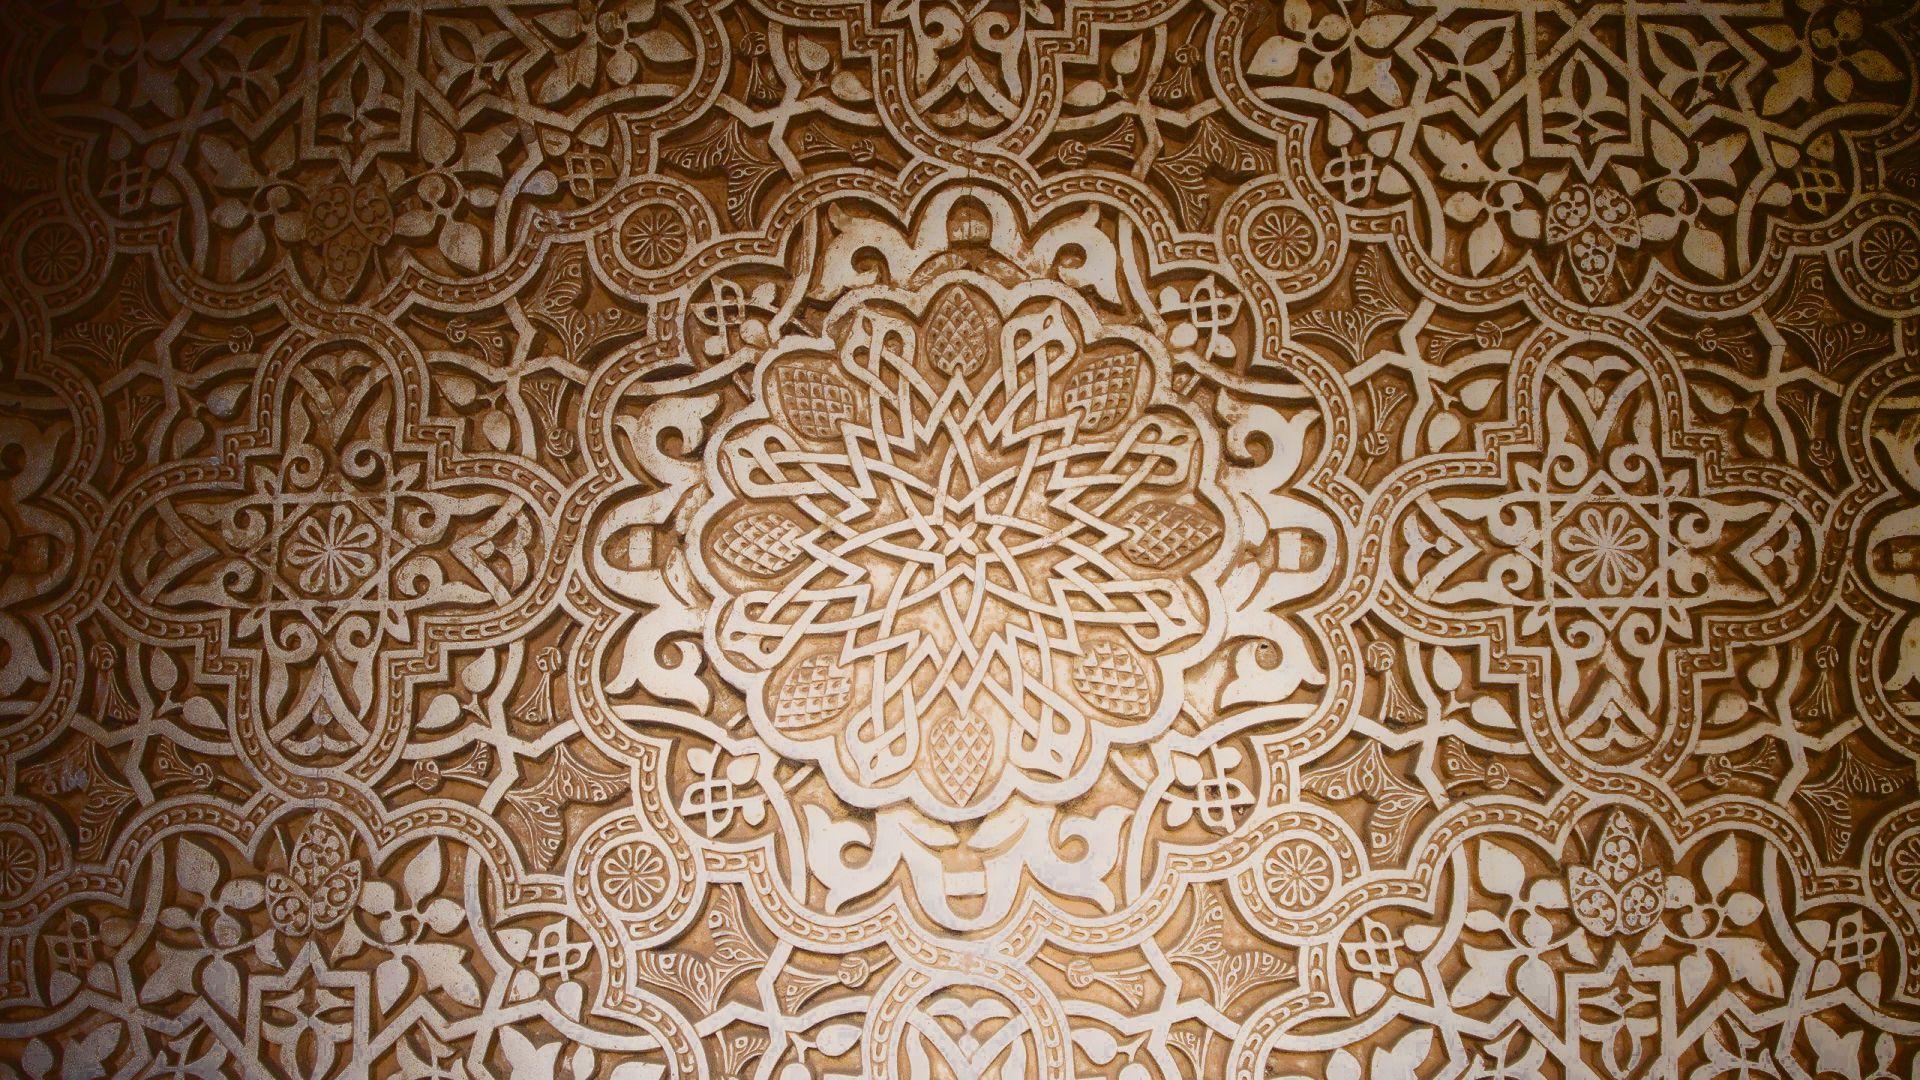 Wallpaper, 1920x1080 px, Arabian, dark, design, islamic, mosaic